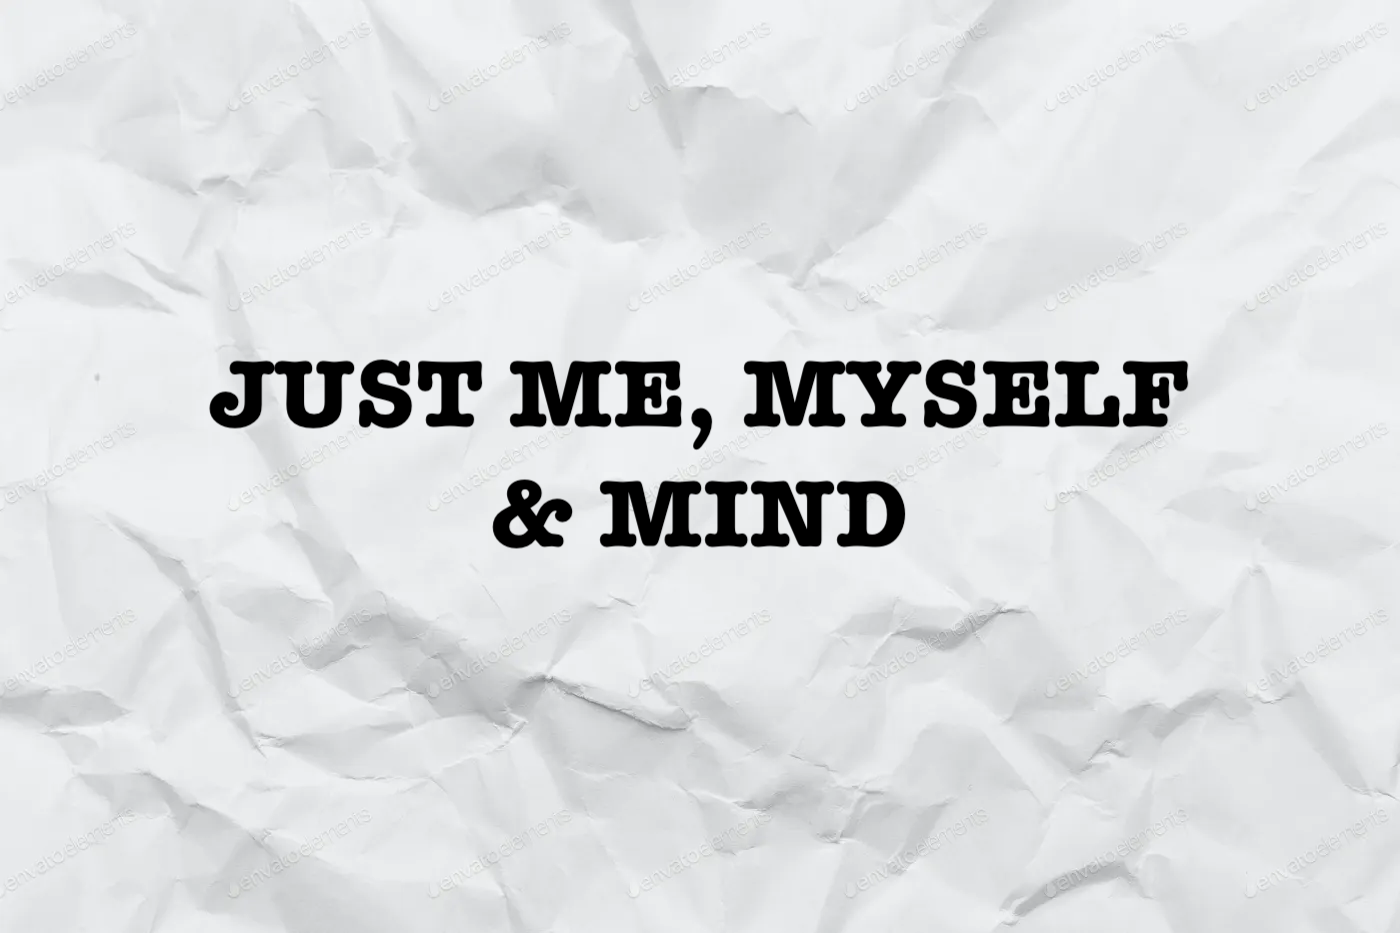 Just me, myself and mind